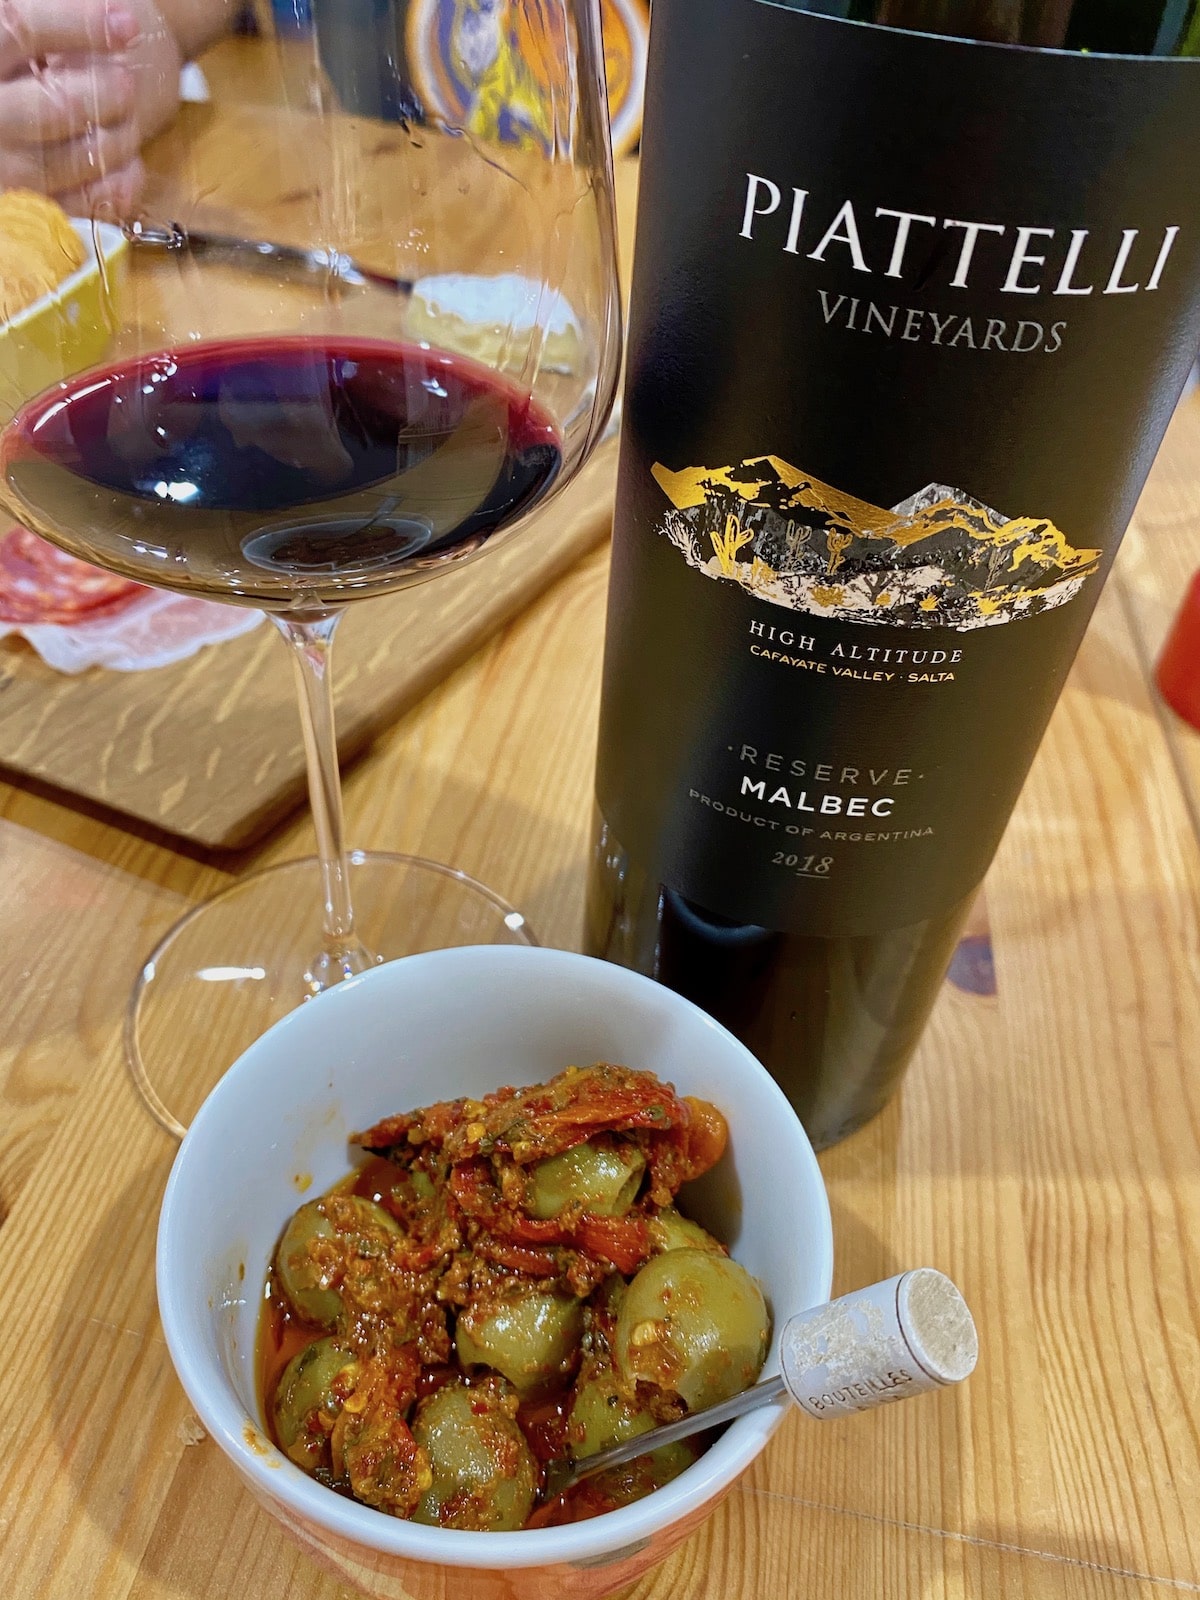 Piattelli Vineyards 2018 Reserve Malbec and olives